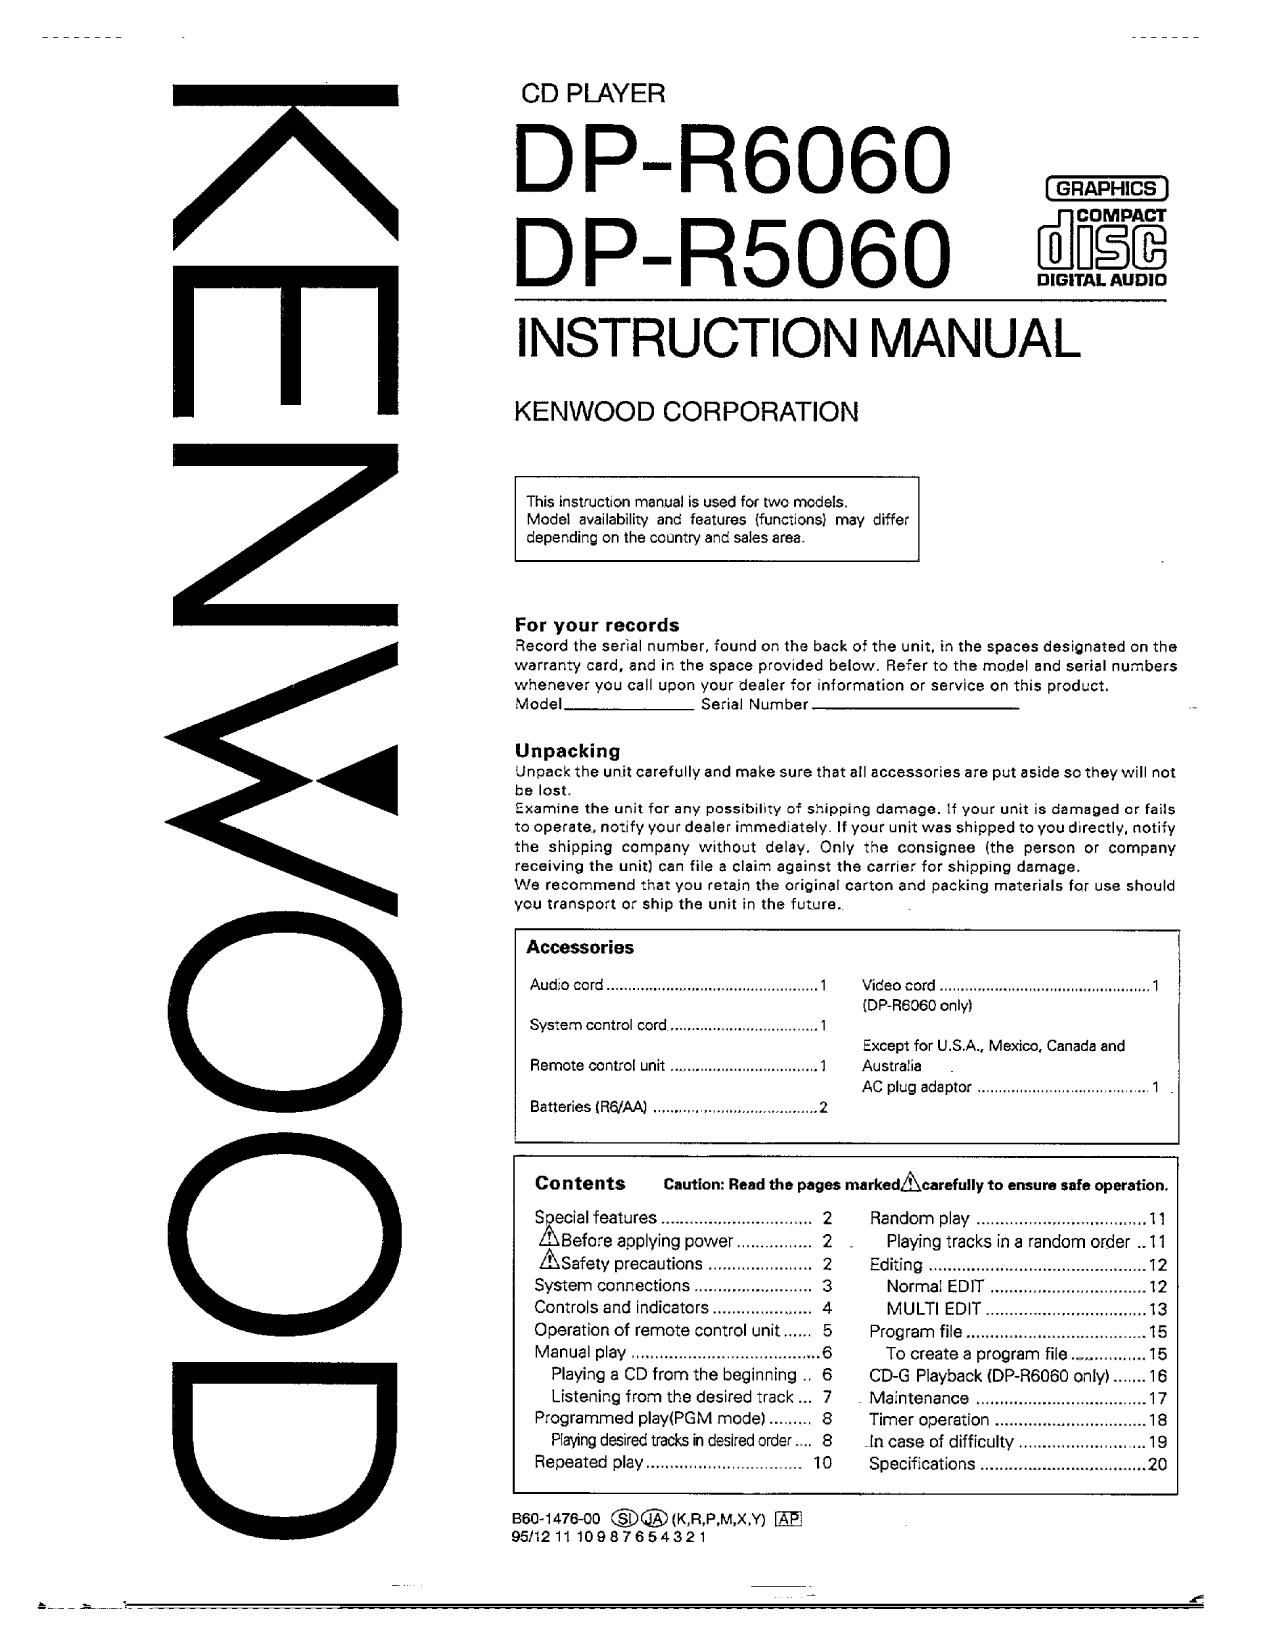 Kenwood DPR 6060 Owners Manual